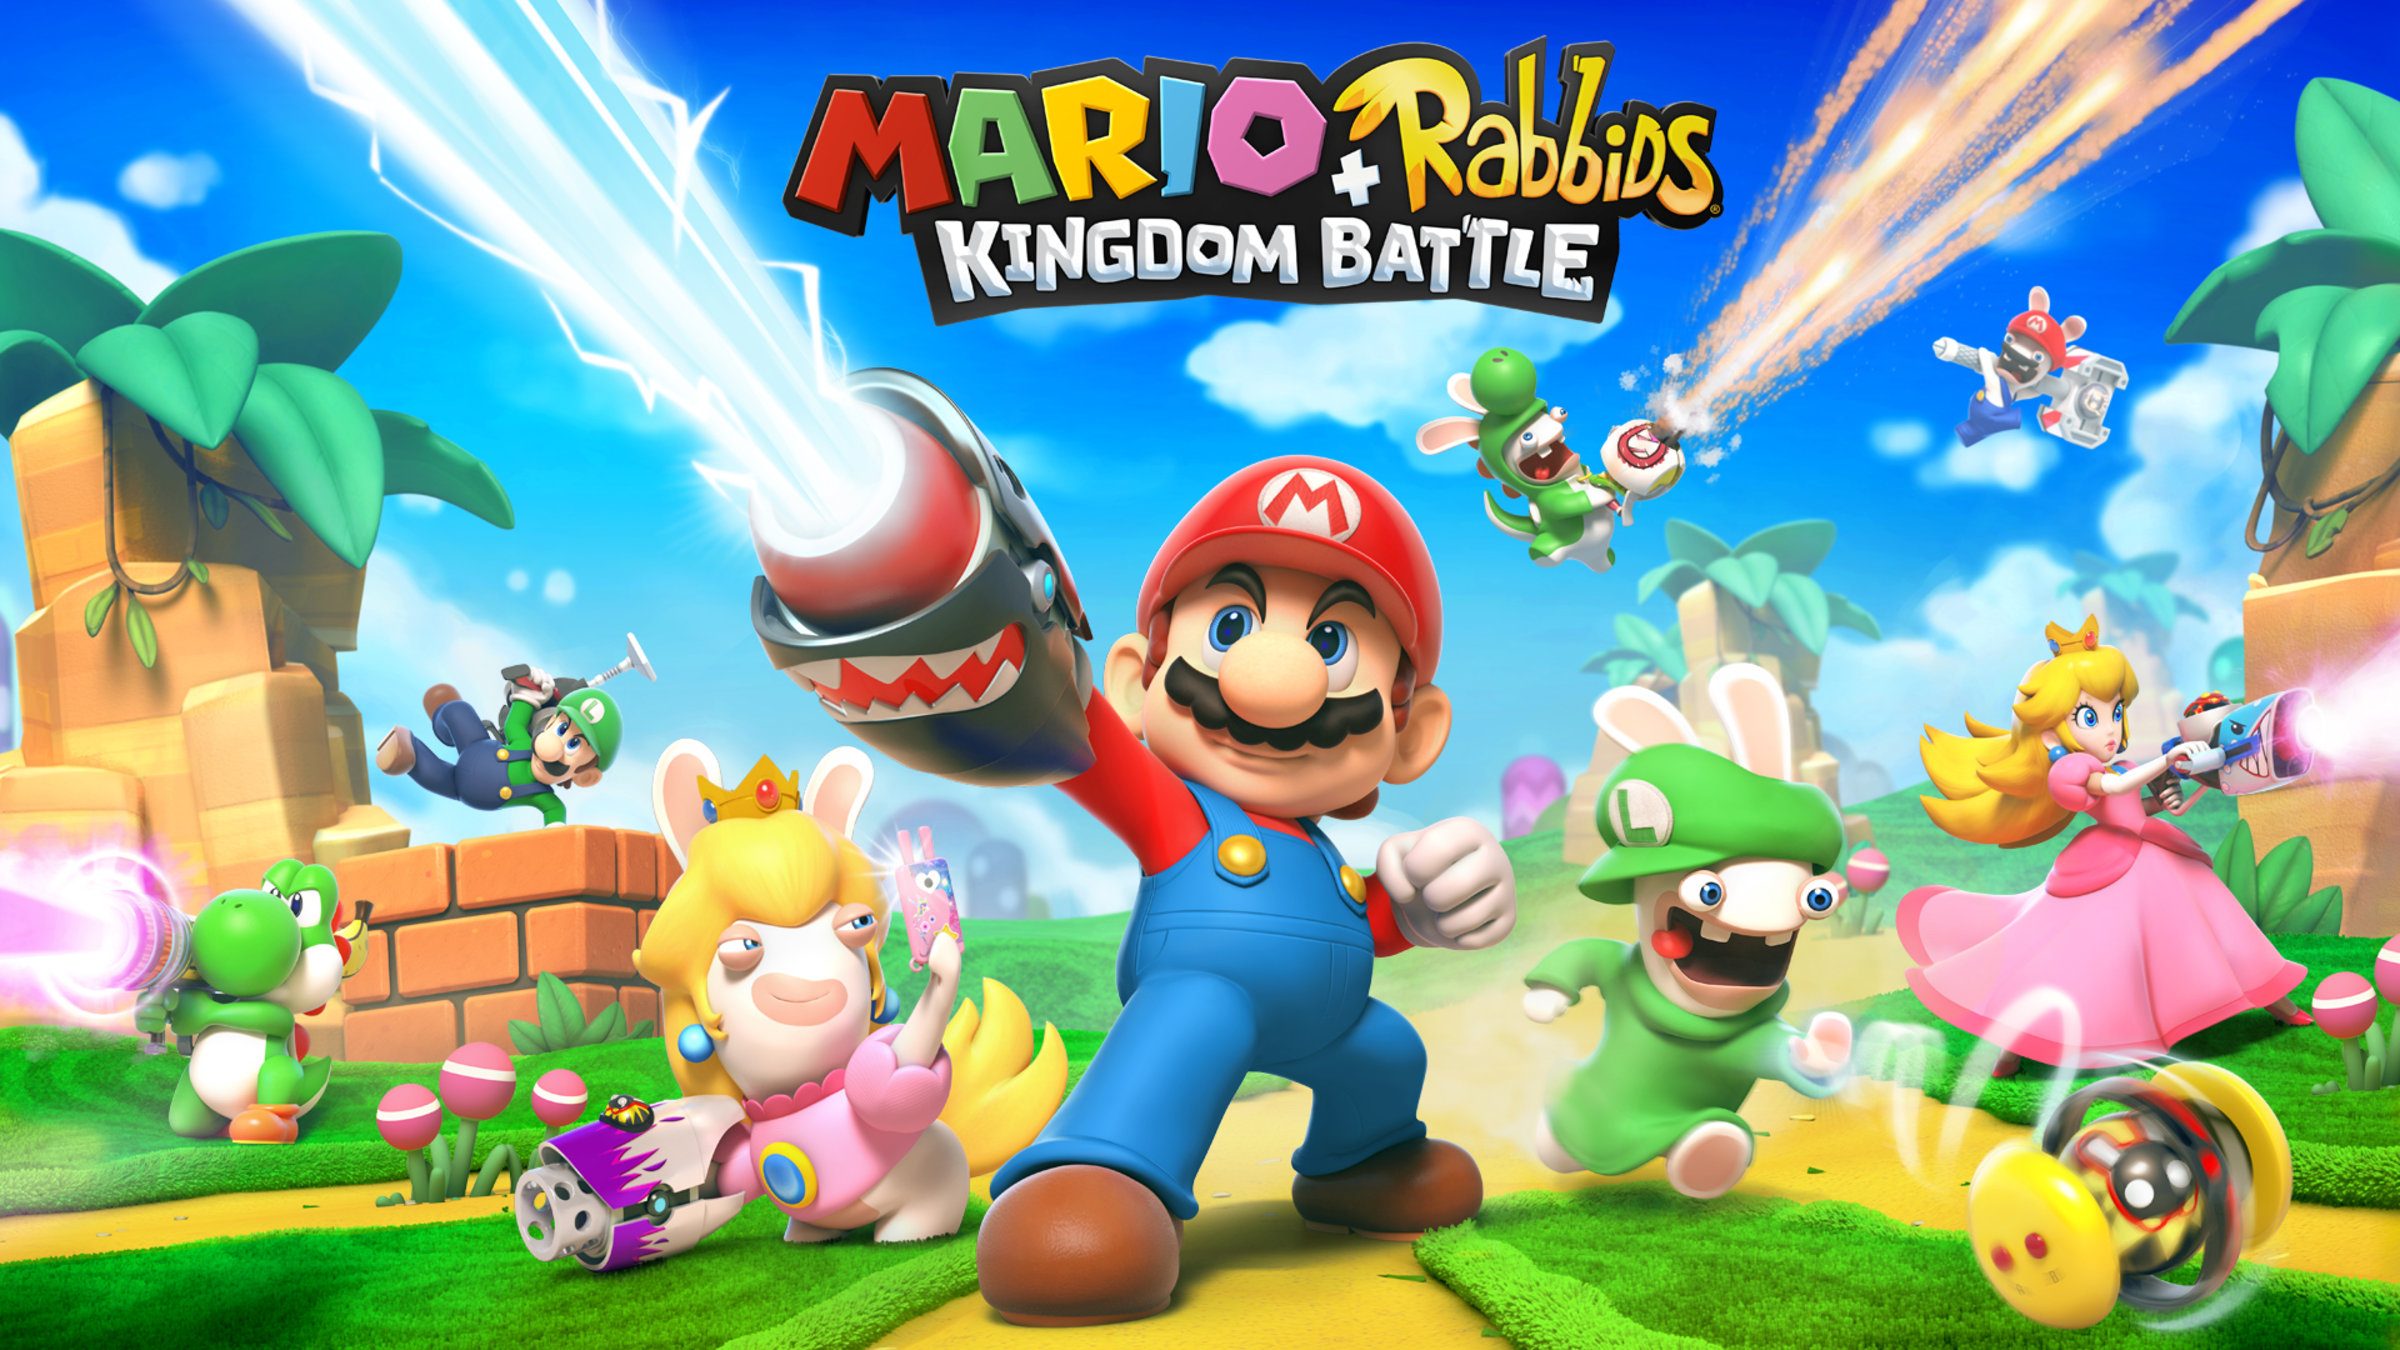 Mario + Rabbids Kingdom Battle, Software